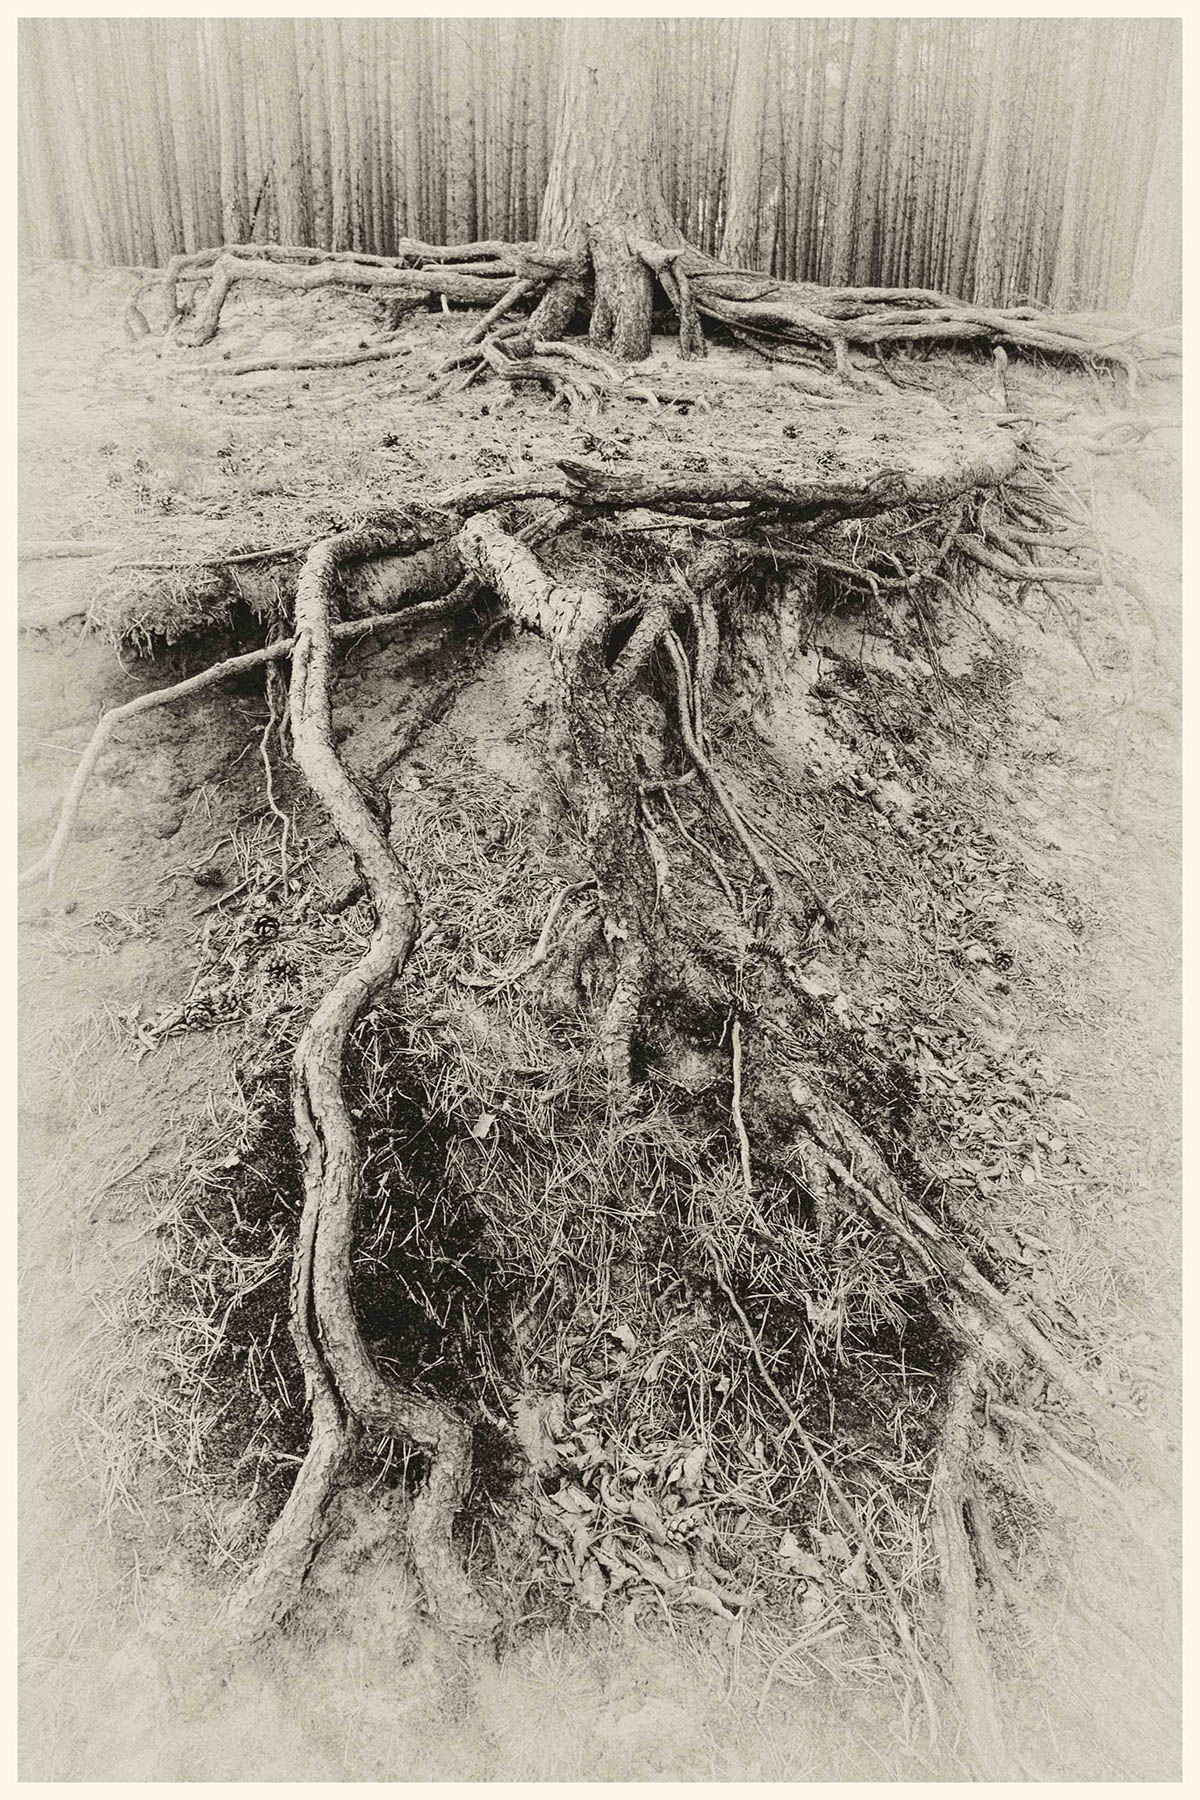 wood root veins of life